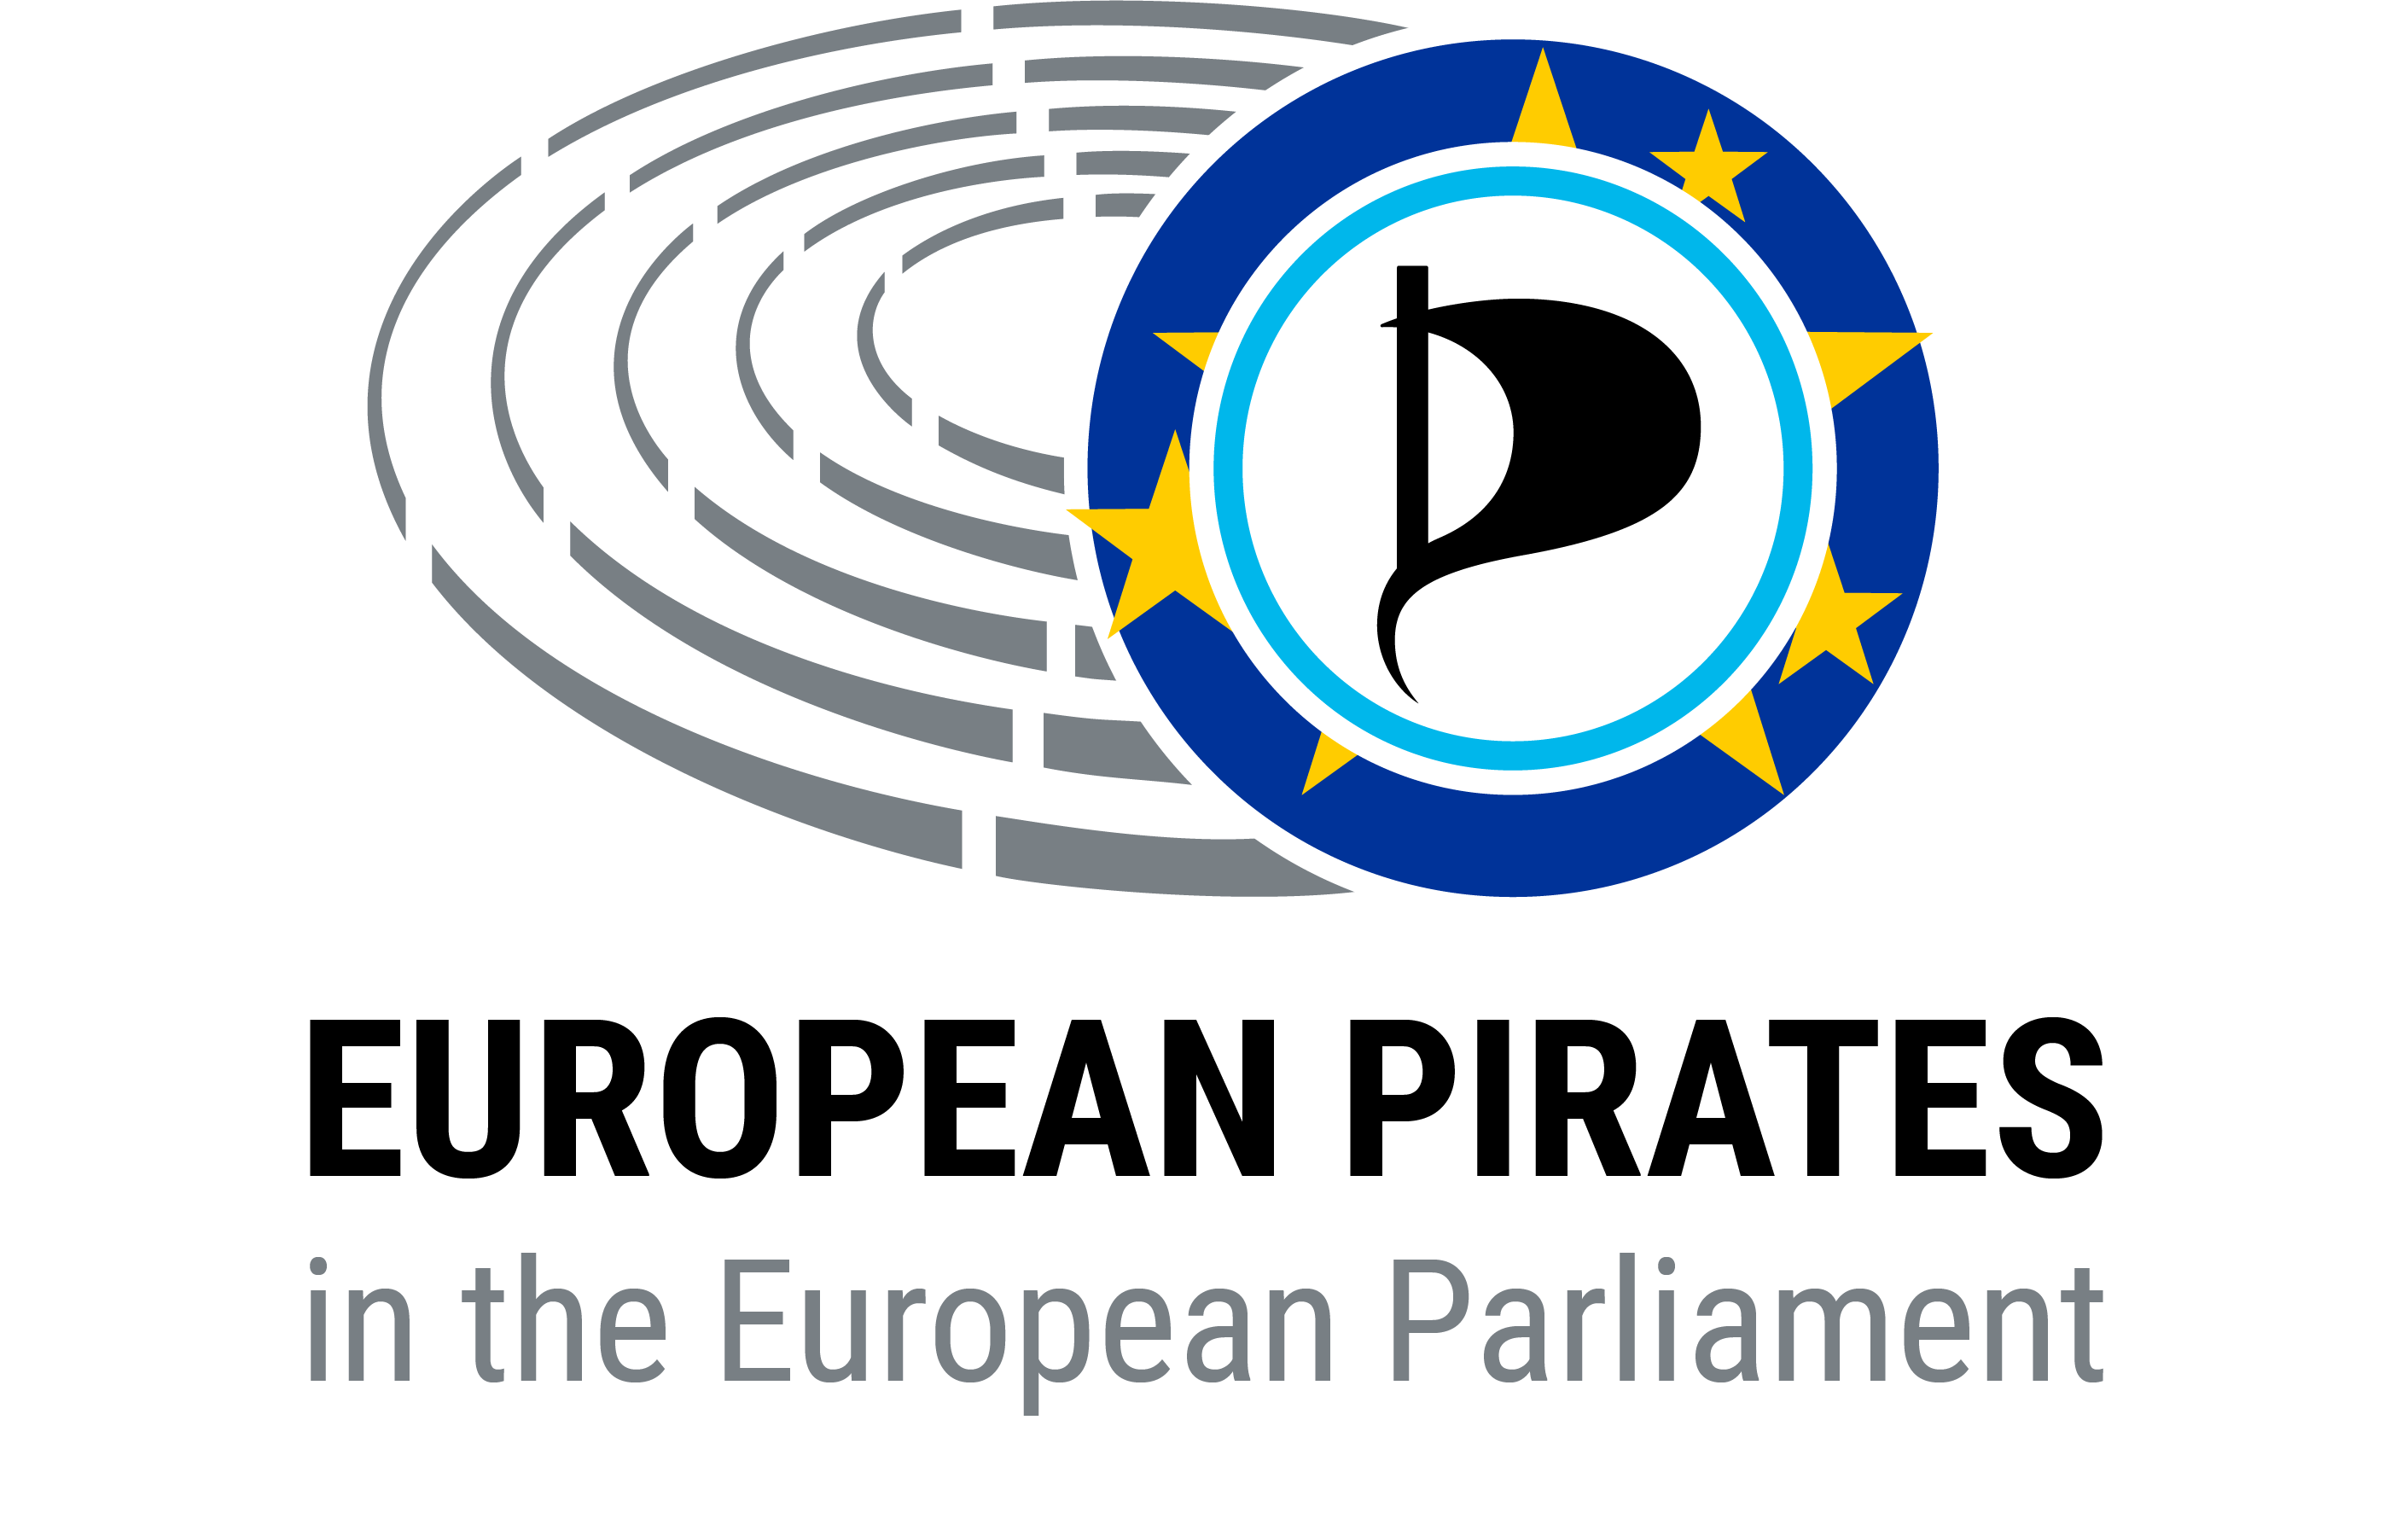 Tomorrow, EU executive branches will vote on ChatControl